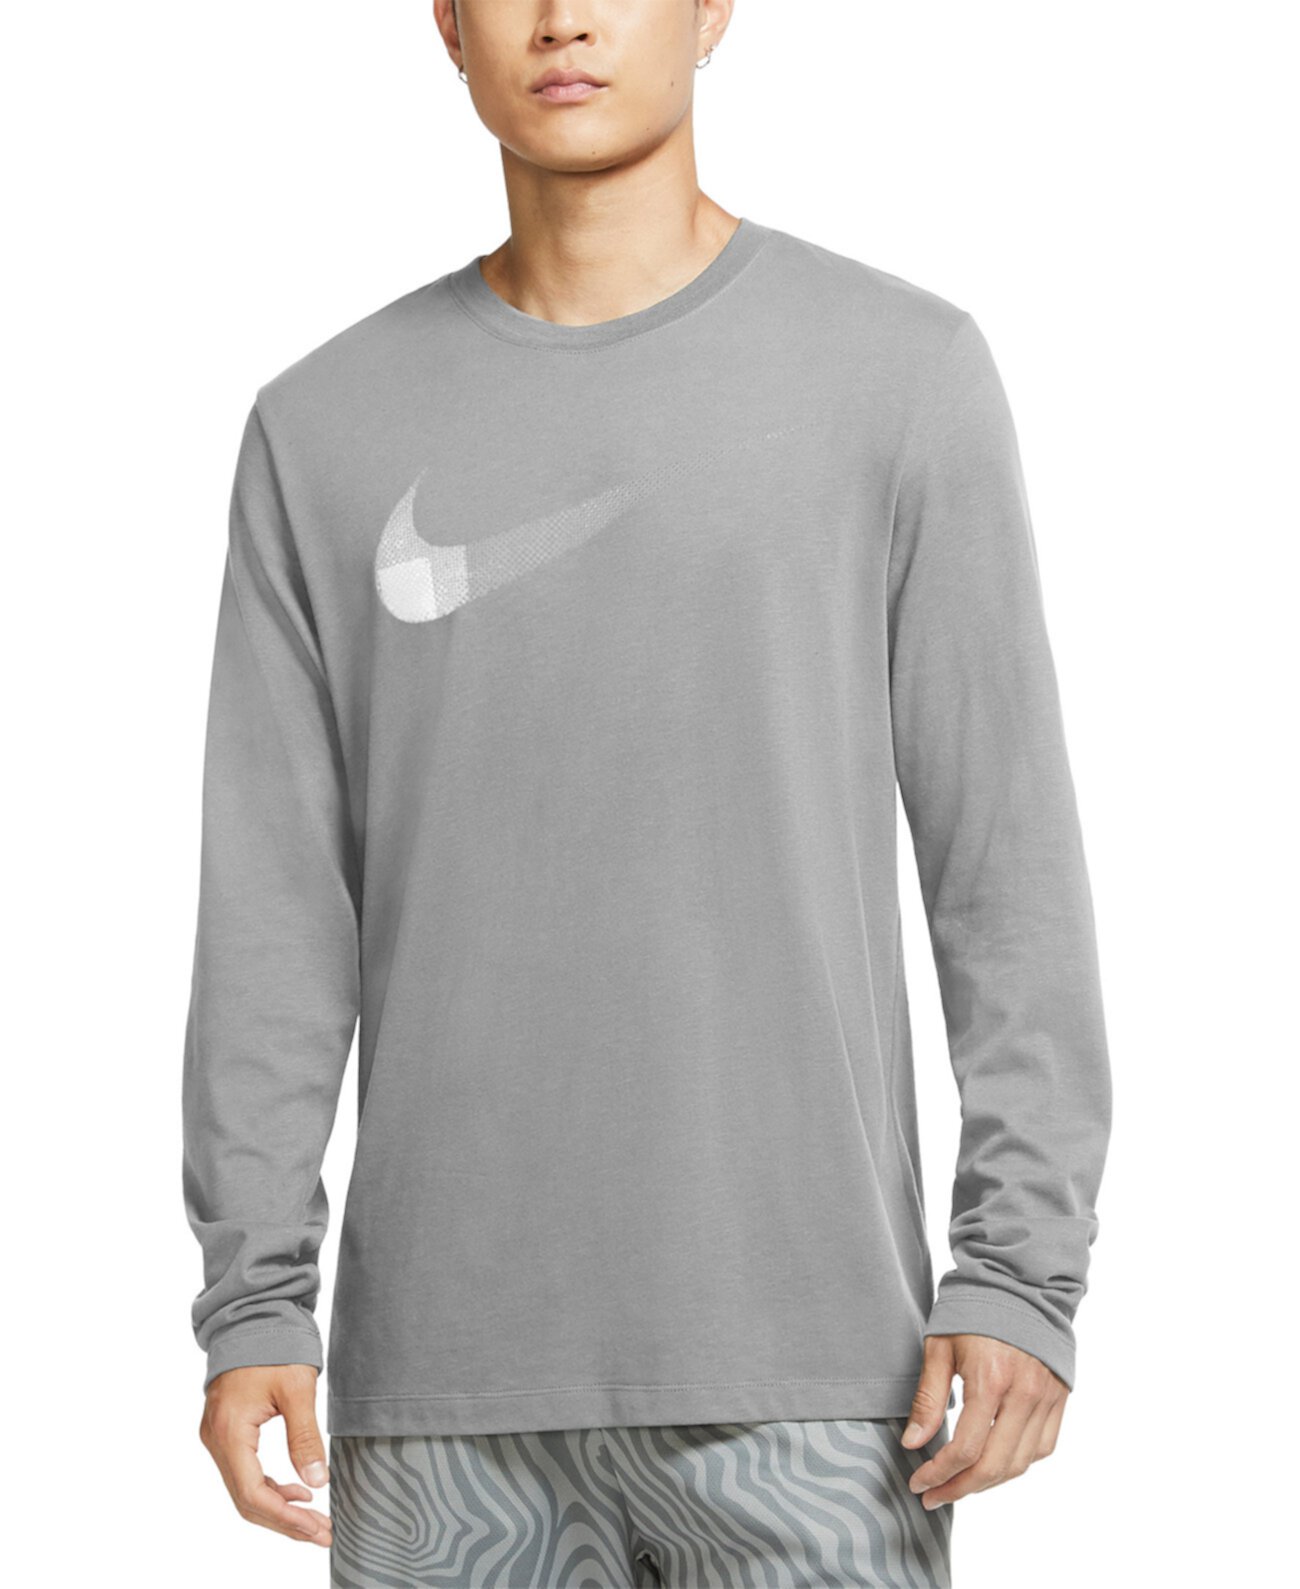 Мужская футболка с длинными рукавами и логотипом Dri-FIT с логотипом Swoosh Nike